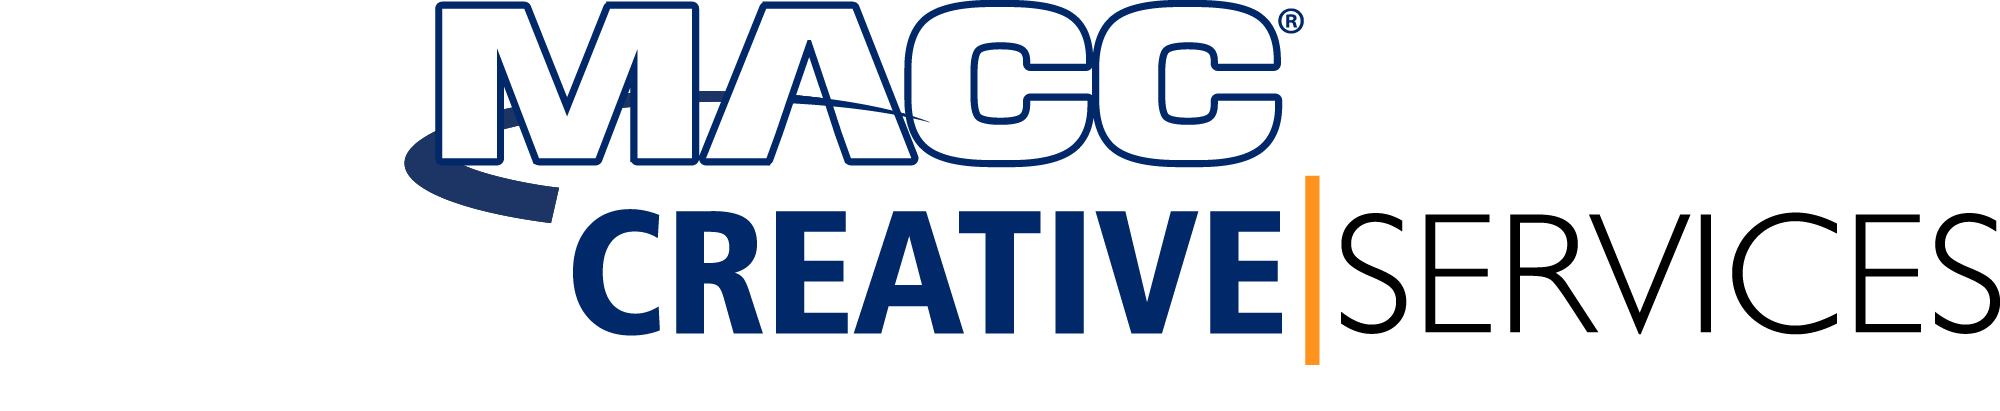 MACC Creative Services